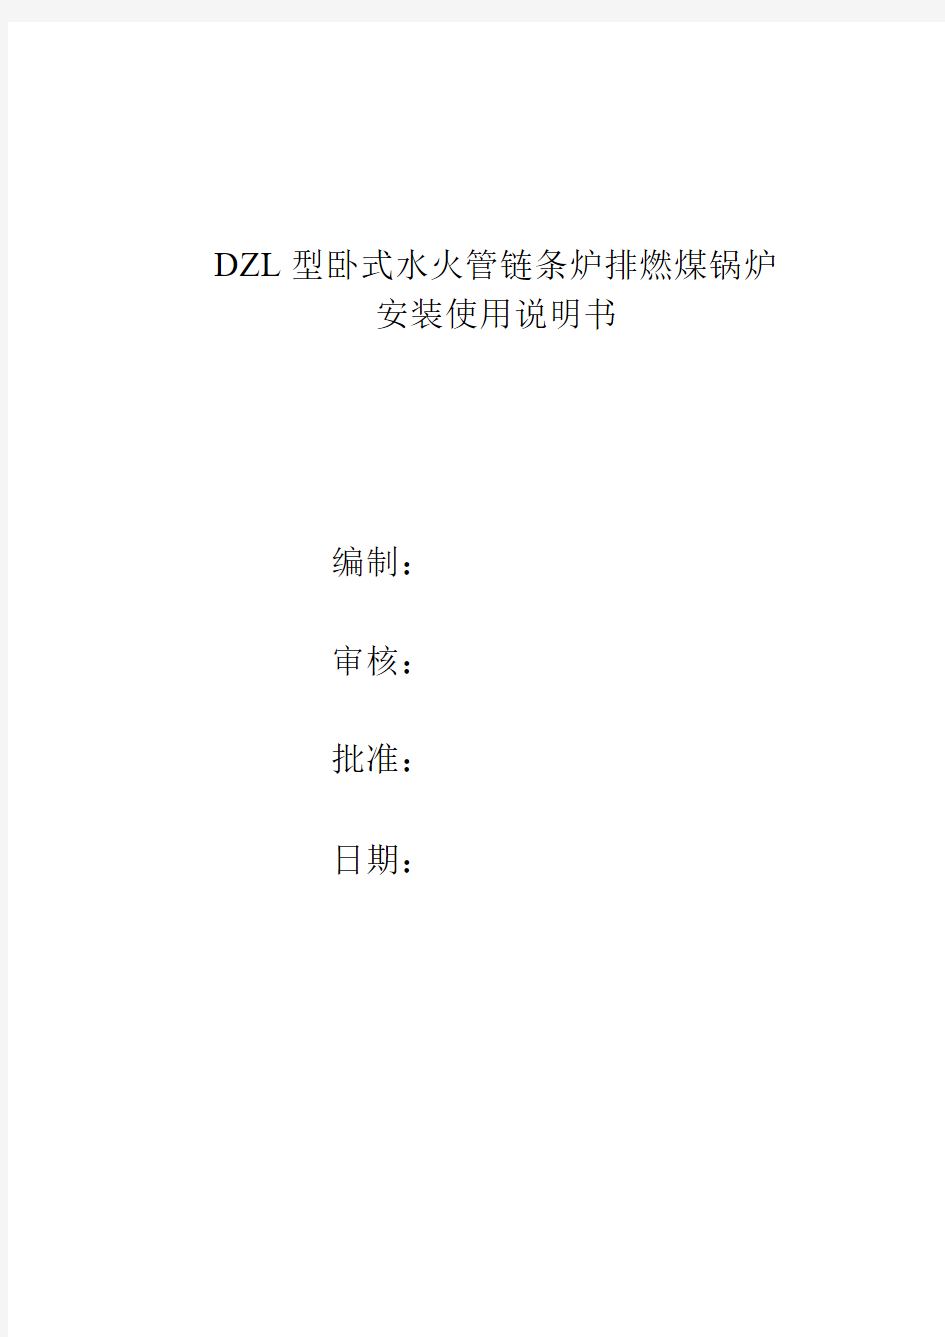 DZL型螺纹管锅炉安装使用说明书(增加经济运行操作)